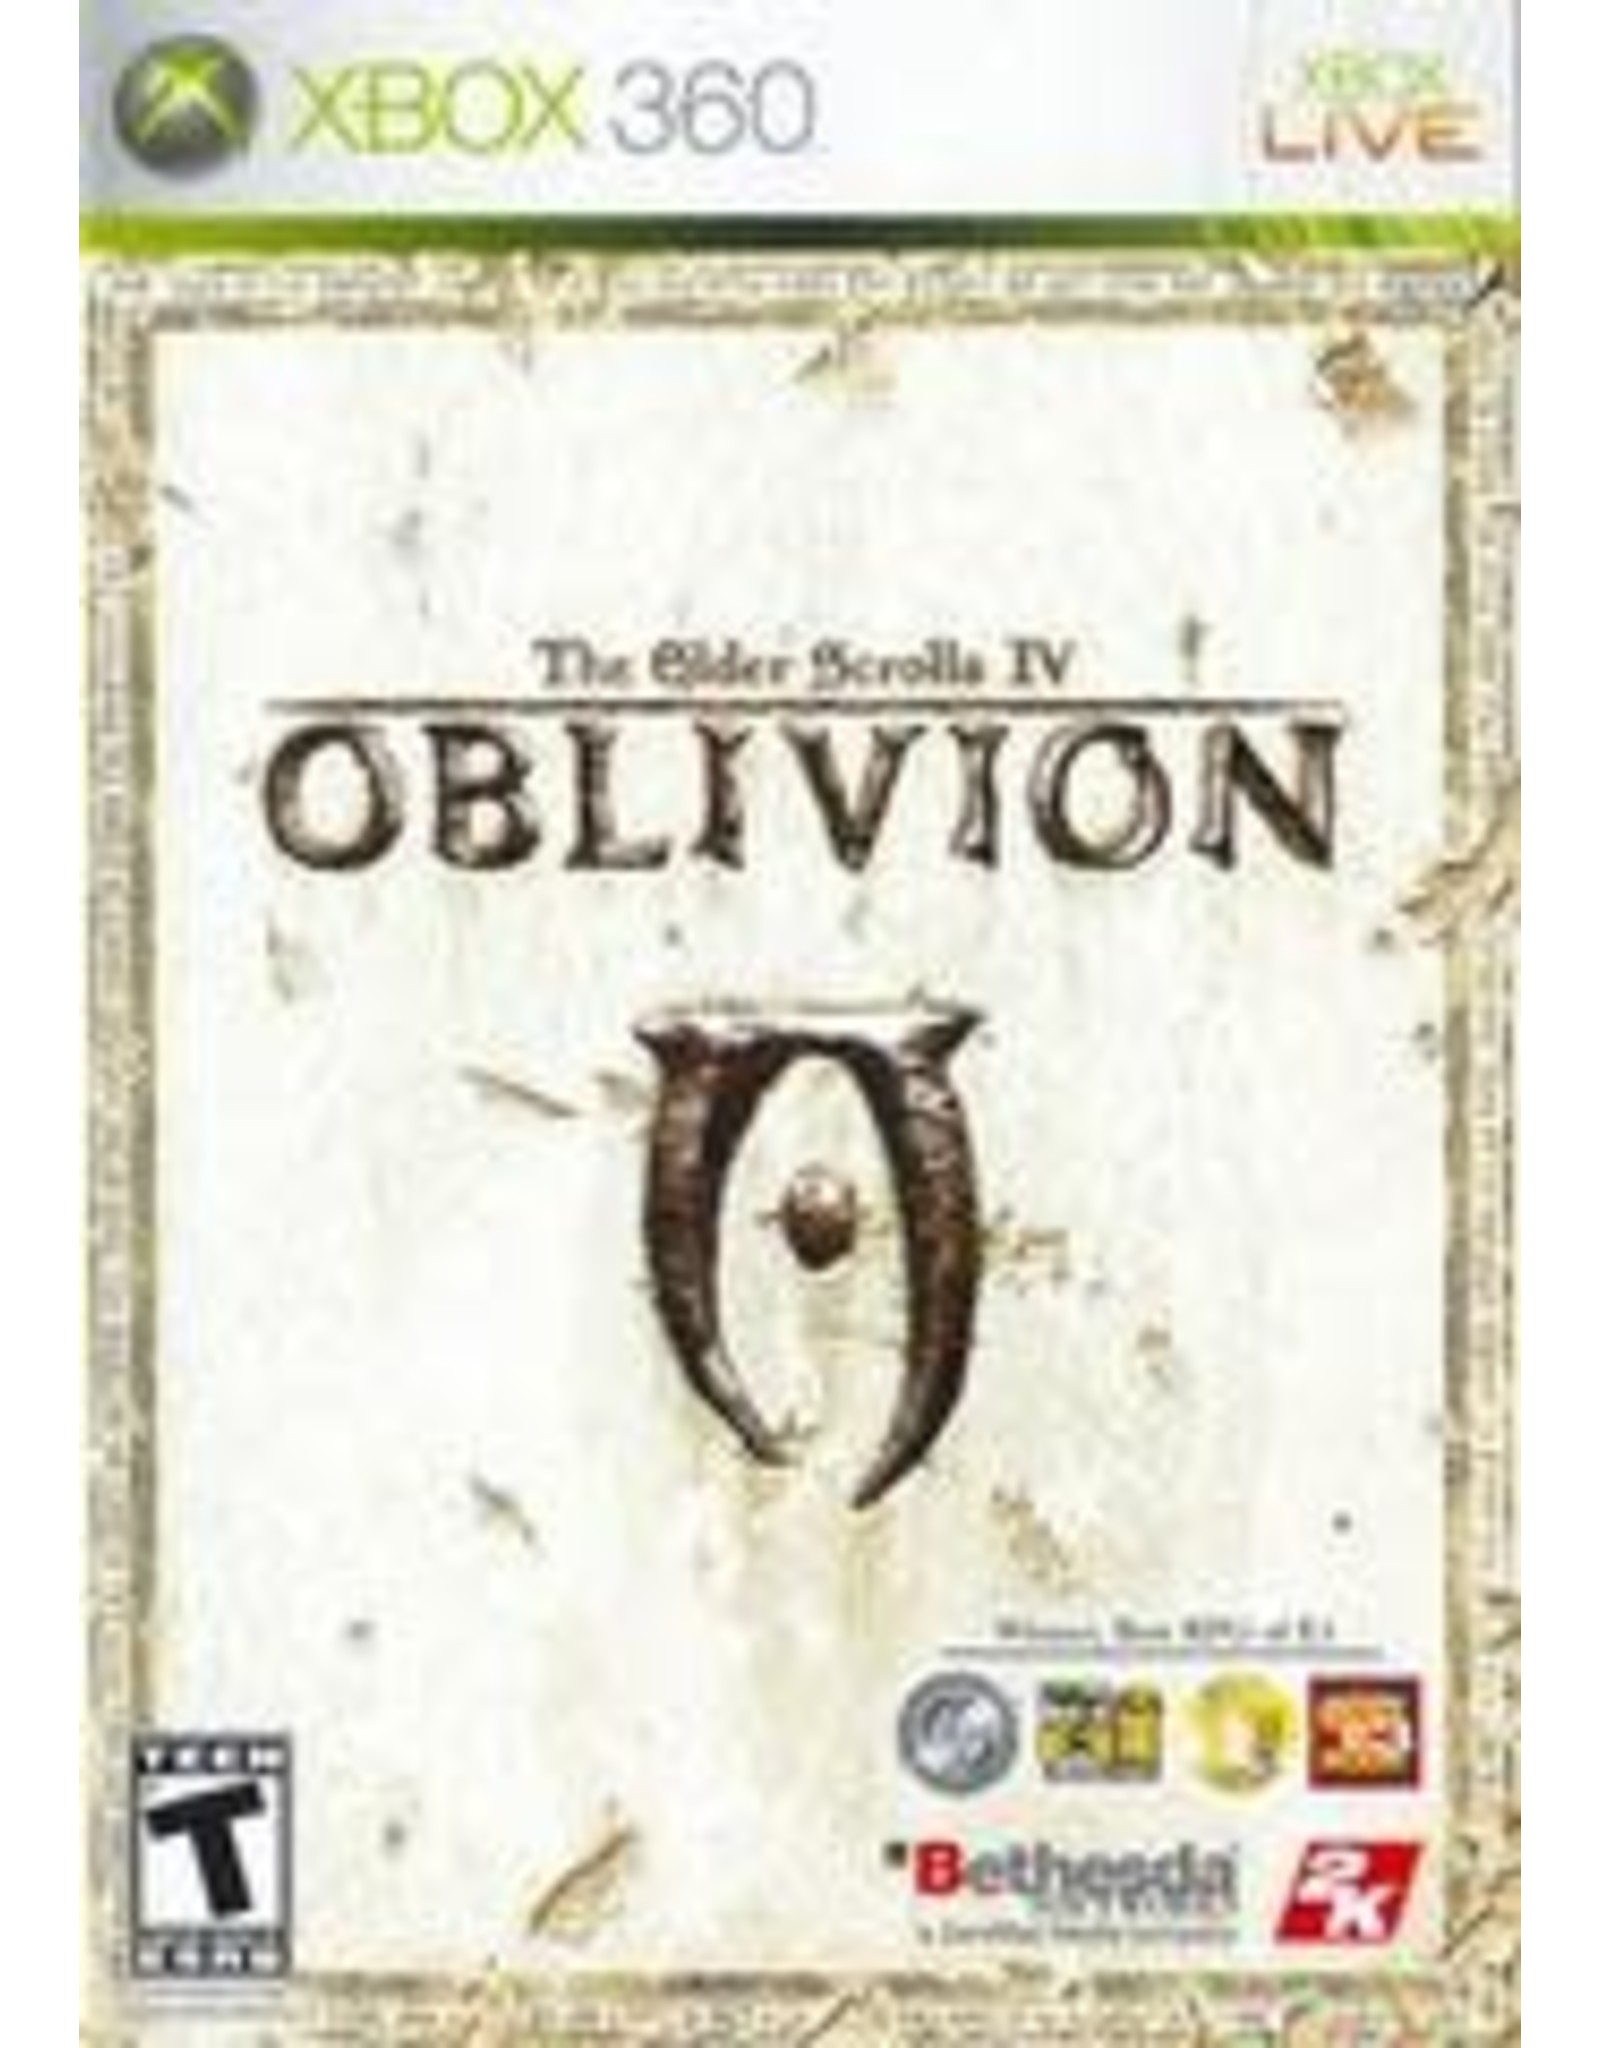 Xbox 360 Oblivion, Elder Scrolls IV (CiB)